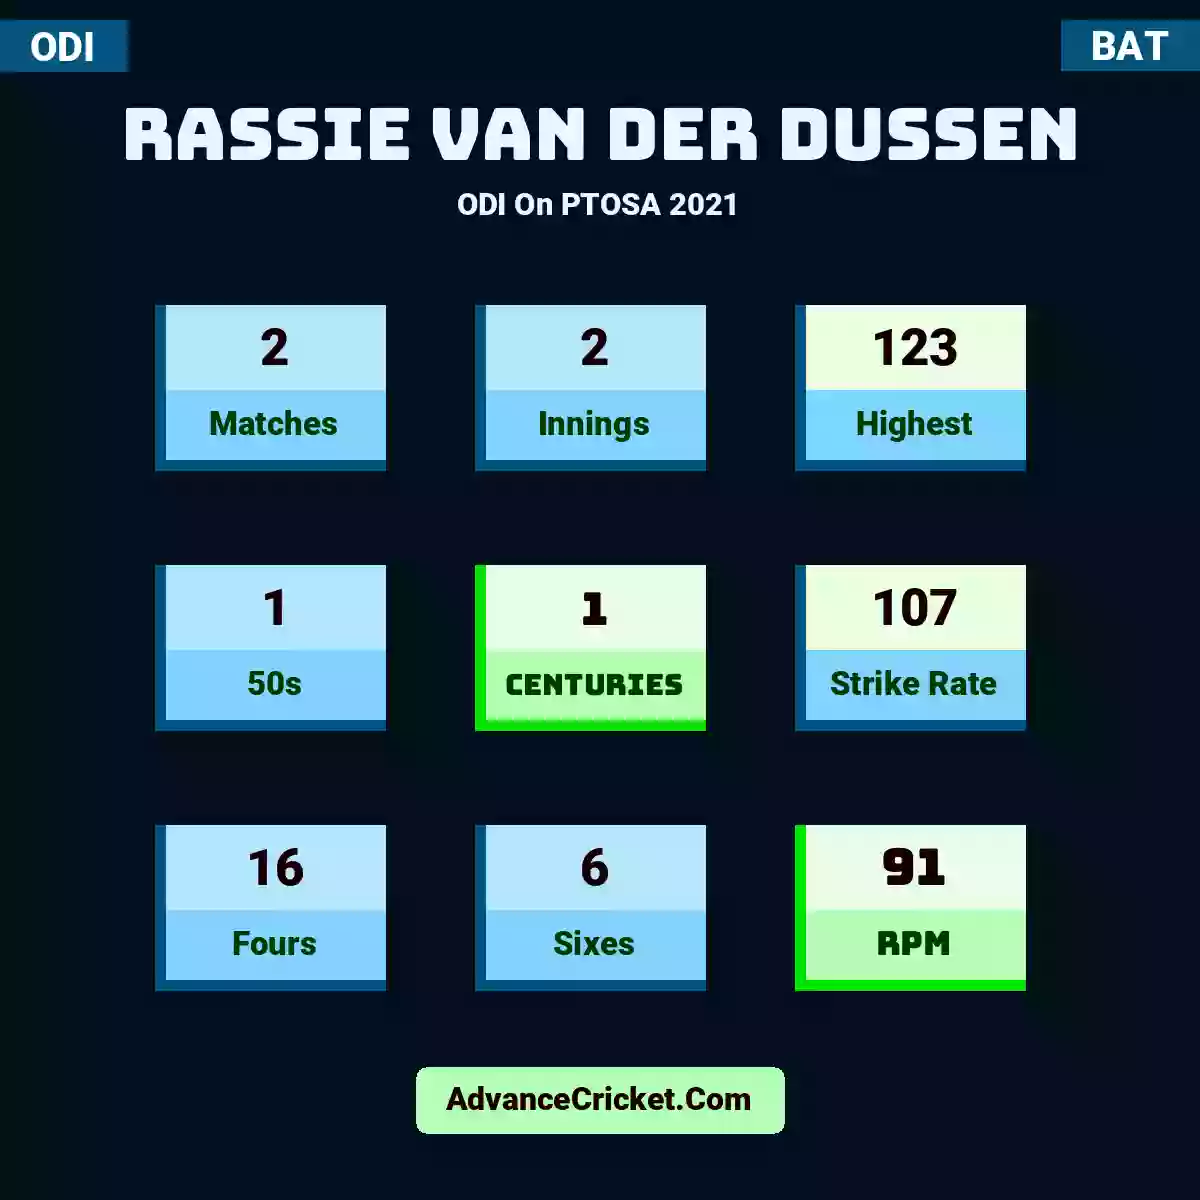 Rassie van der Dussen ODI  On PTOSA 2021, Rassie van der Dussen played 2 matches, scored 123 runs as highest, 1 half-centuries, and 1 centuries, with a strike rate of 107. R.Dussen hit 16 fours and 6 sixes, with an RPM of 91.